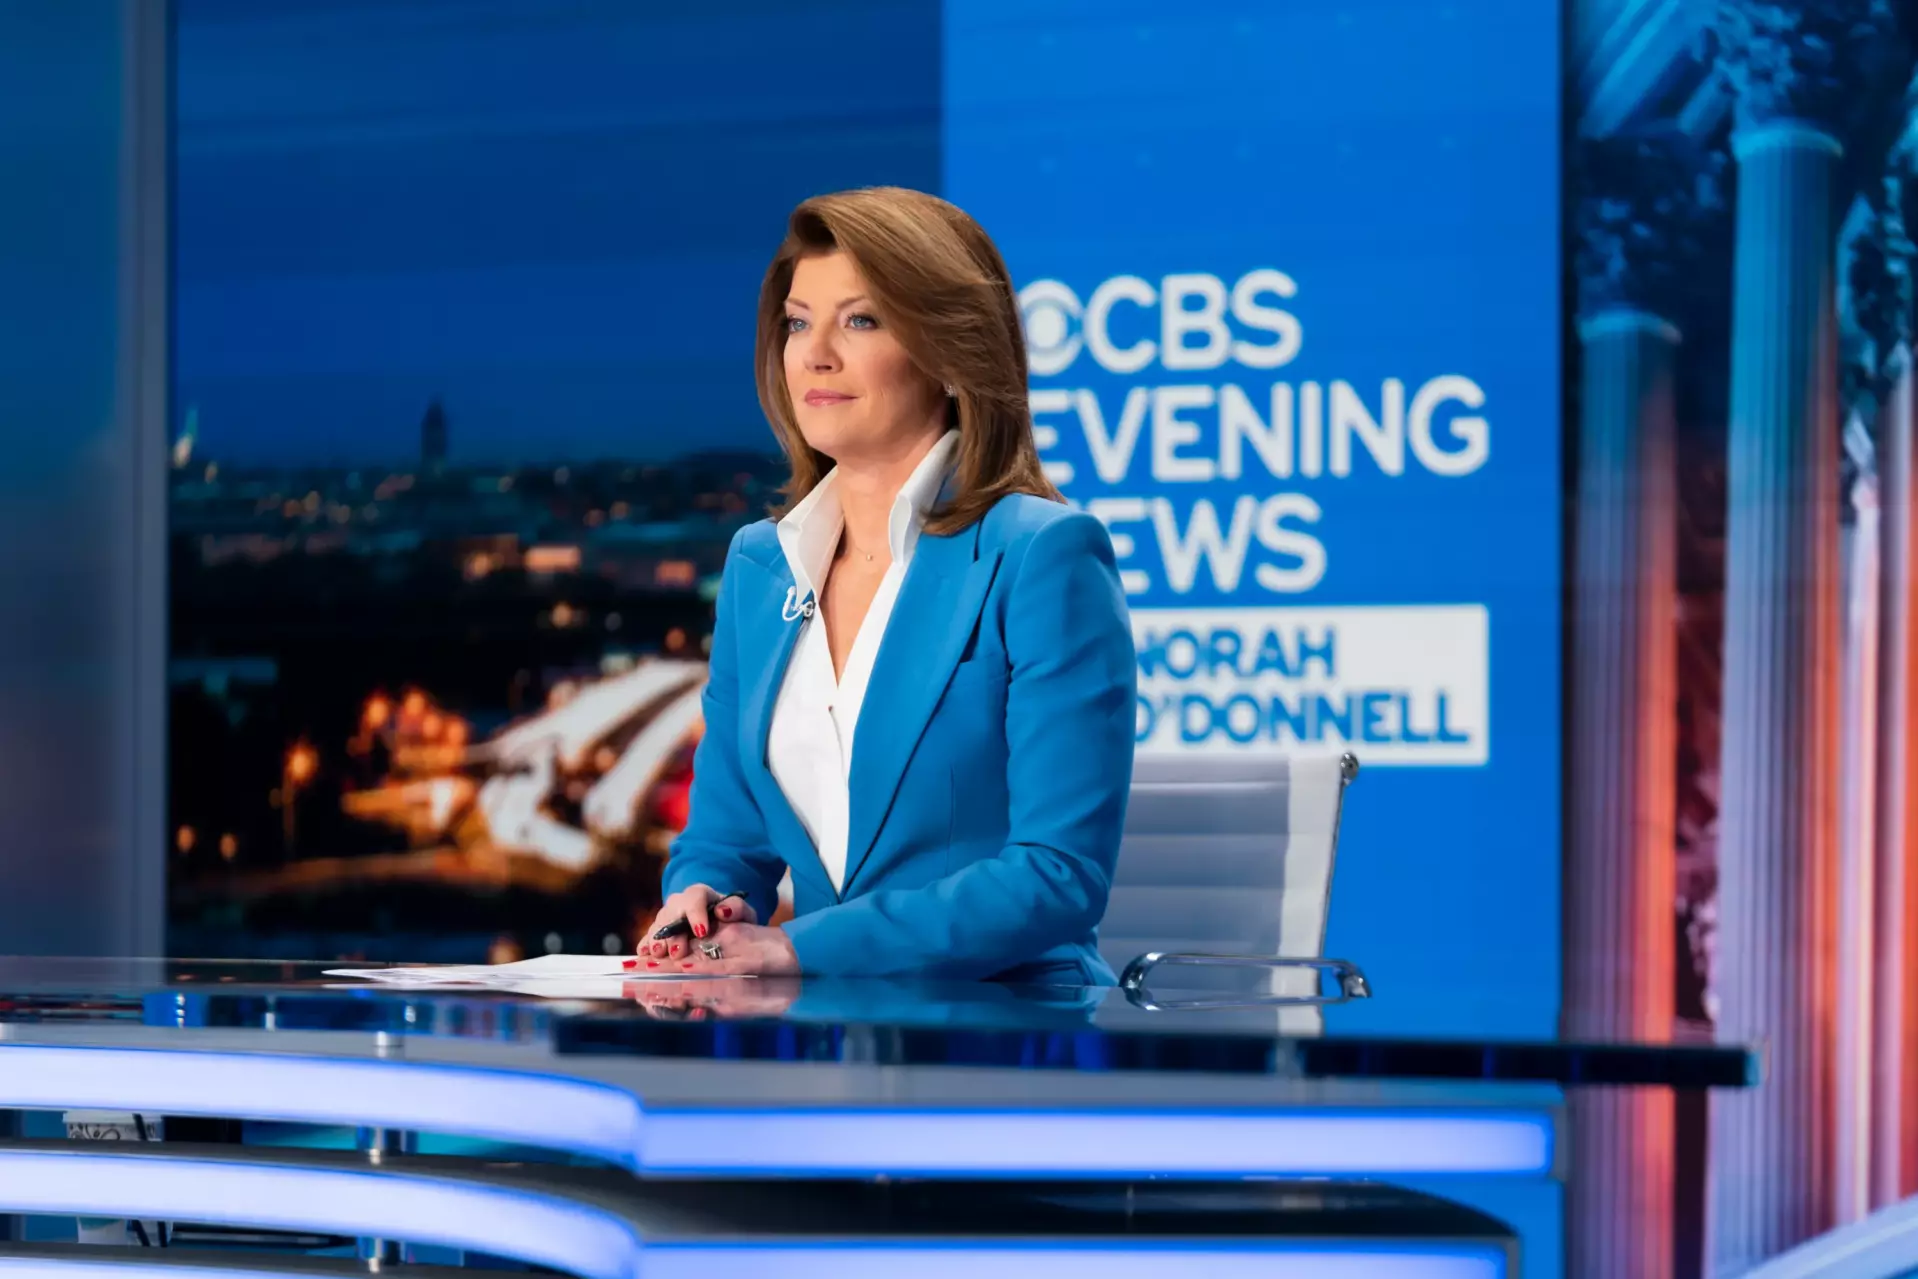 Norah O'Donnell doing her job as TV News Reporter in CBS Evening News